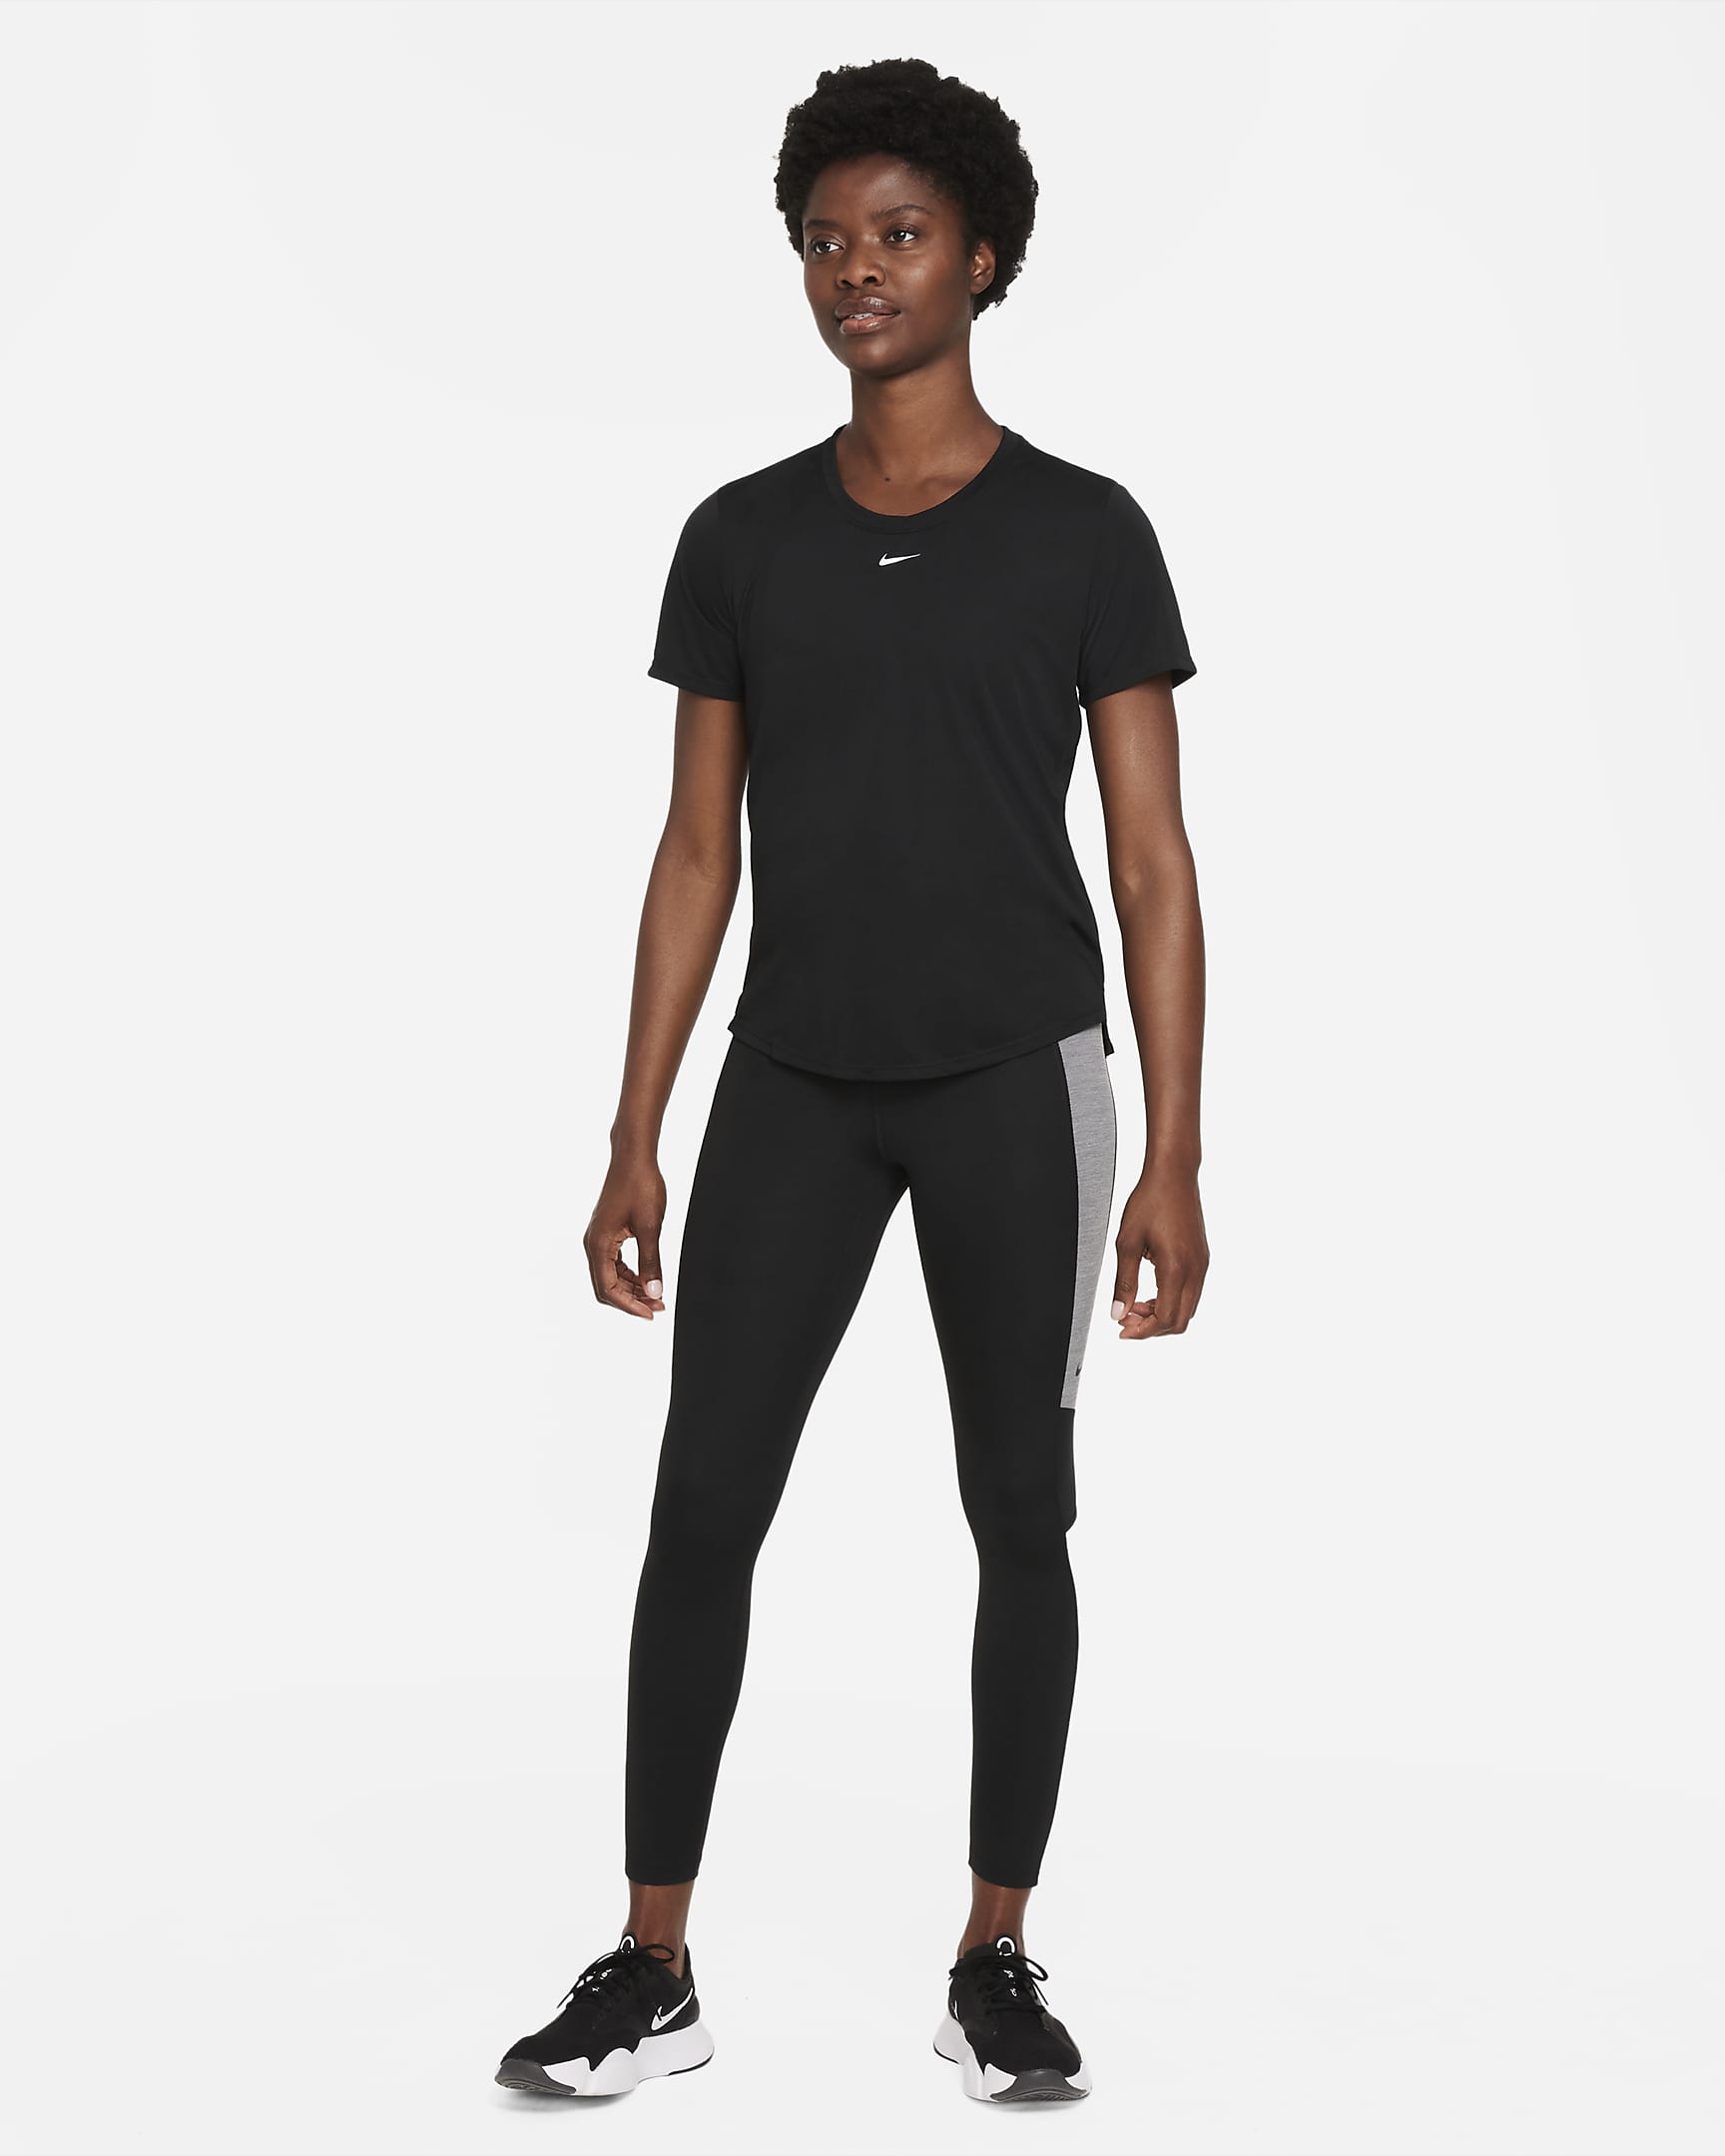 Nike Dri-FIT One Women's Standard-Fit Short-Sleeve Top. Nike CH